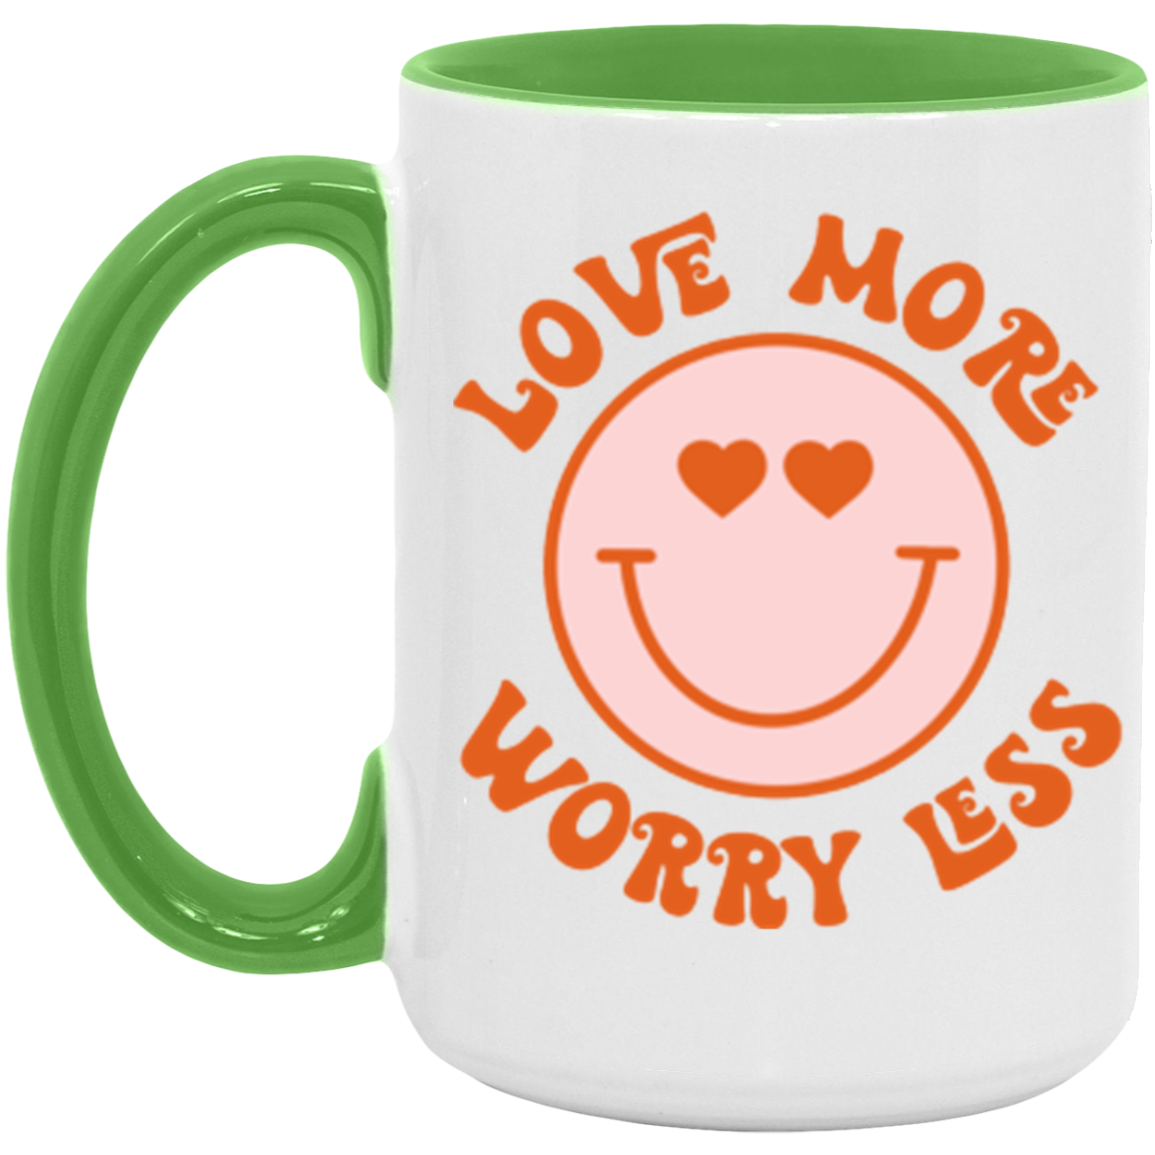 Love More Worry Less Mug